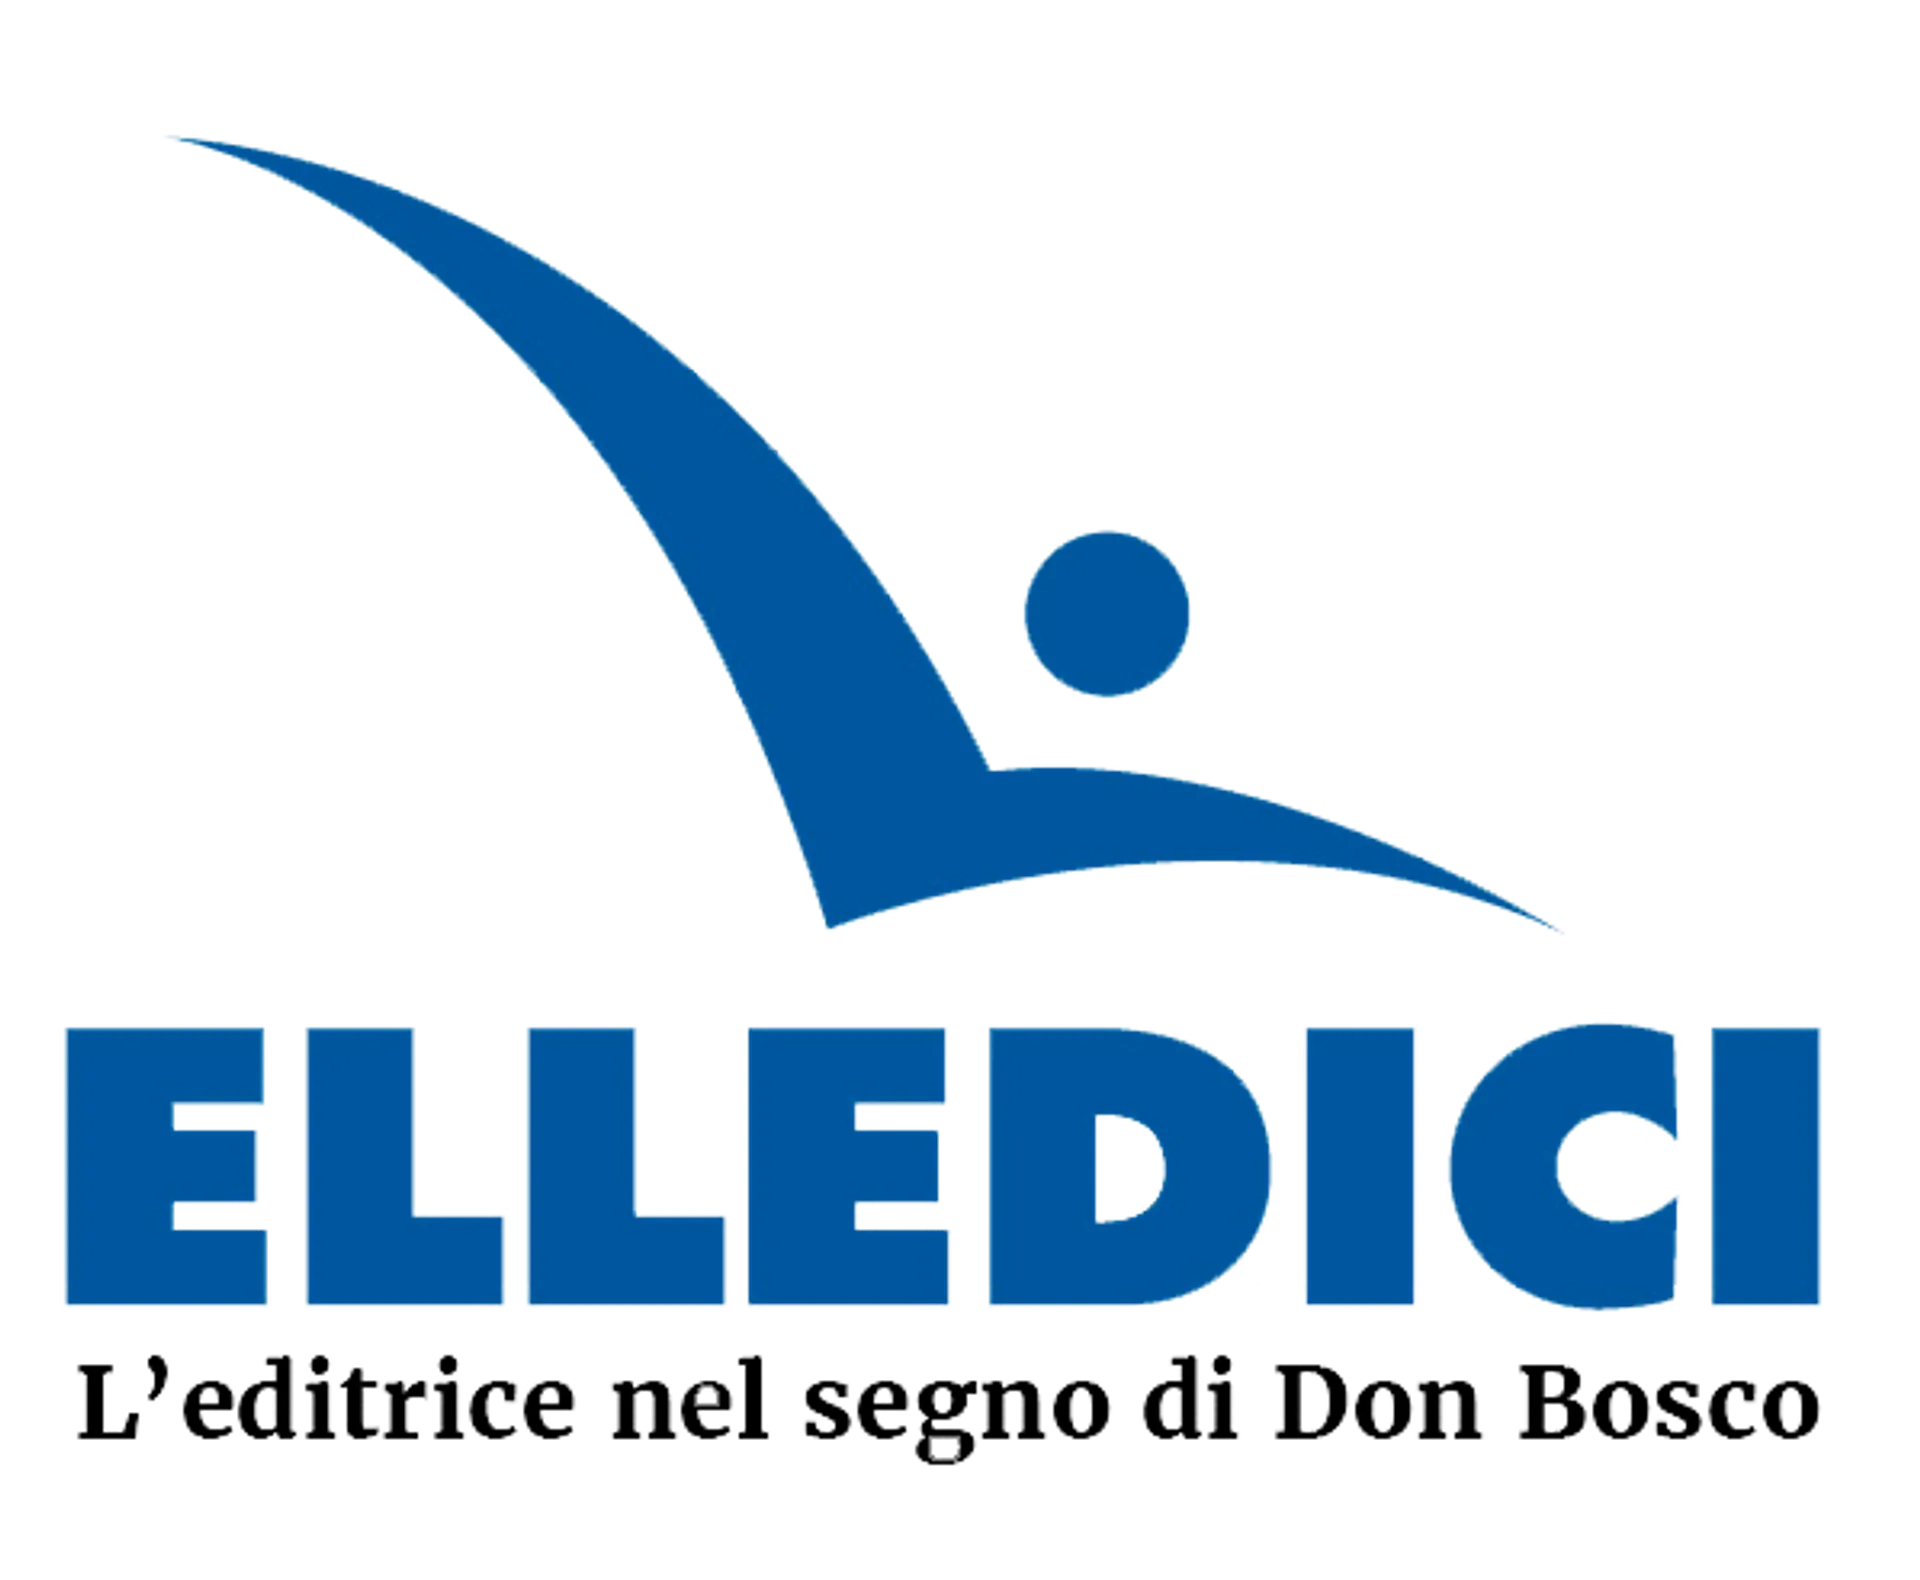 ELLEDICI logo